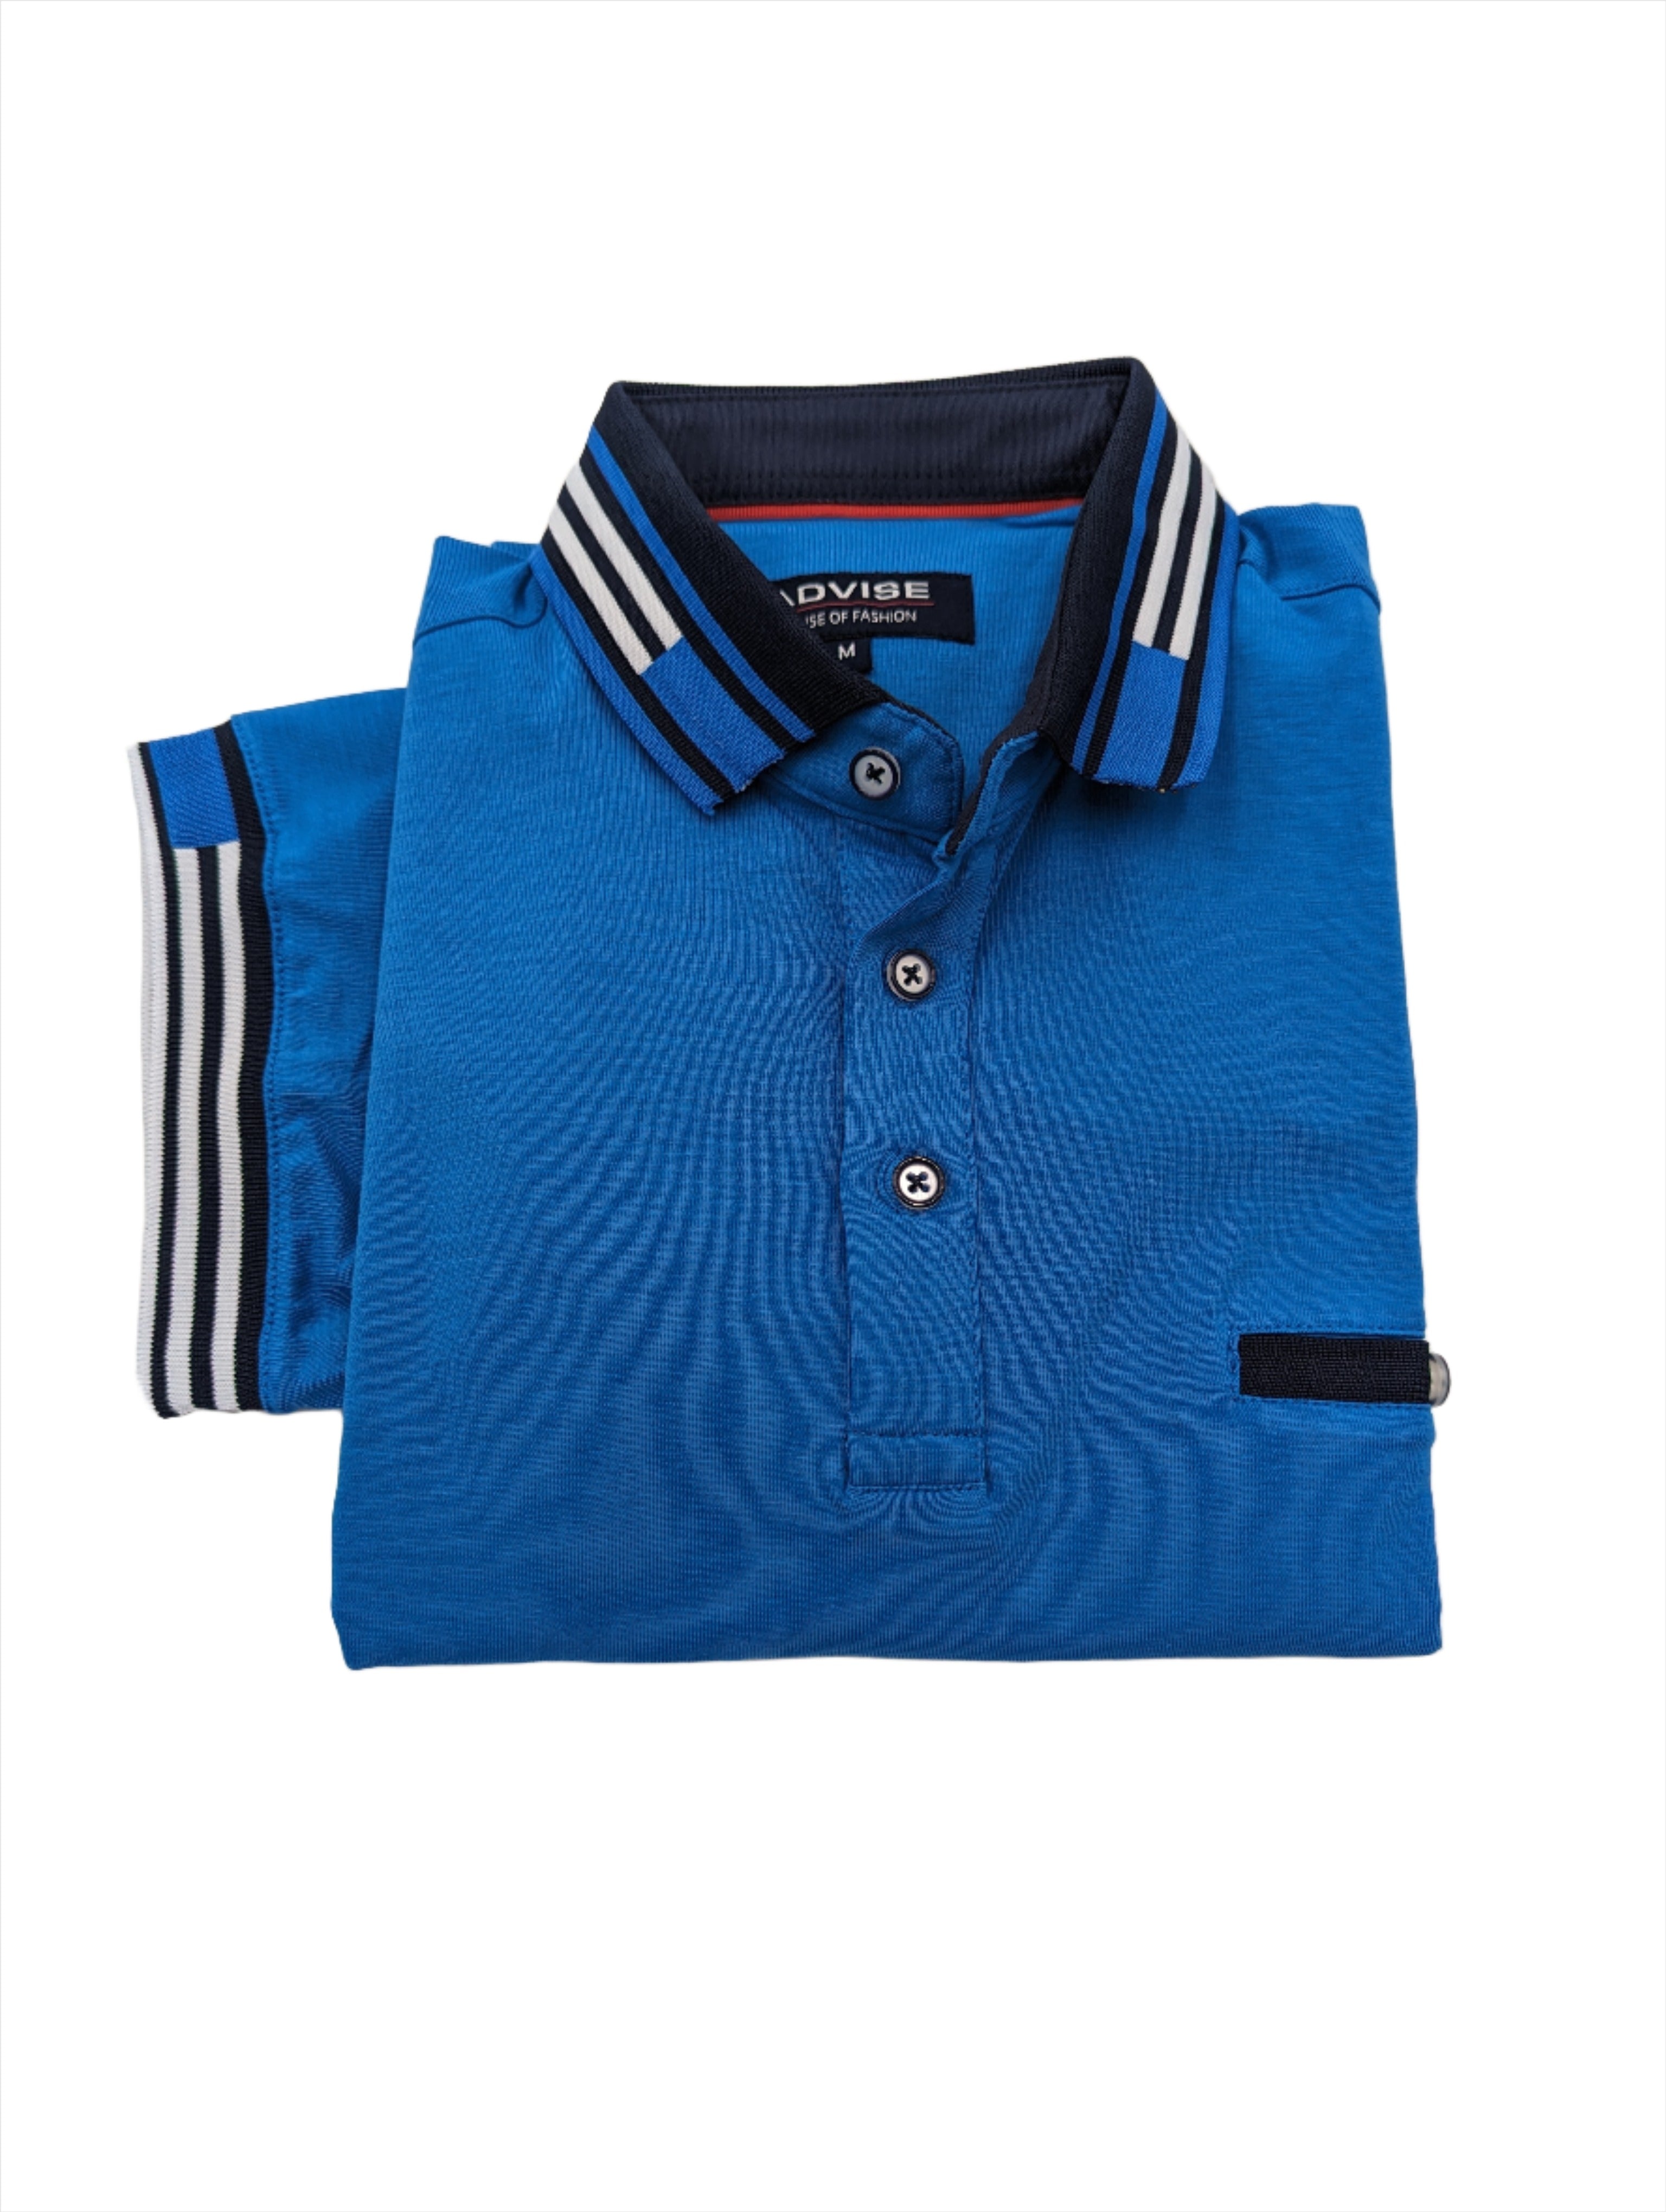 Advise Polo Shirt - Cobalt-Sleeve detail